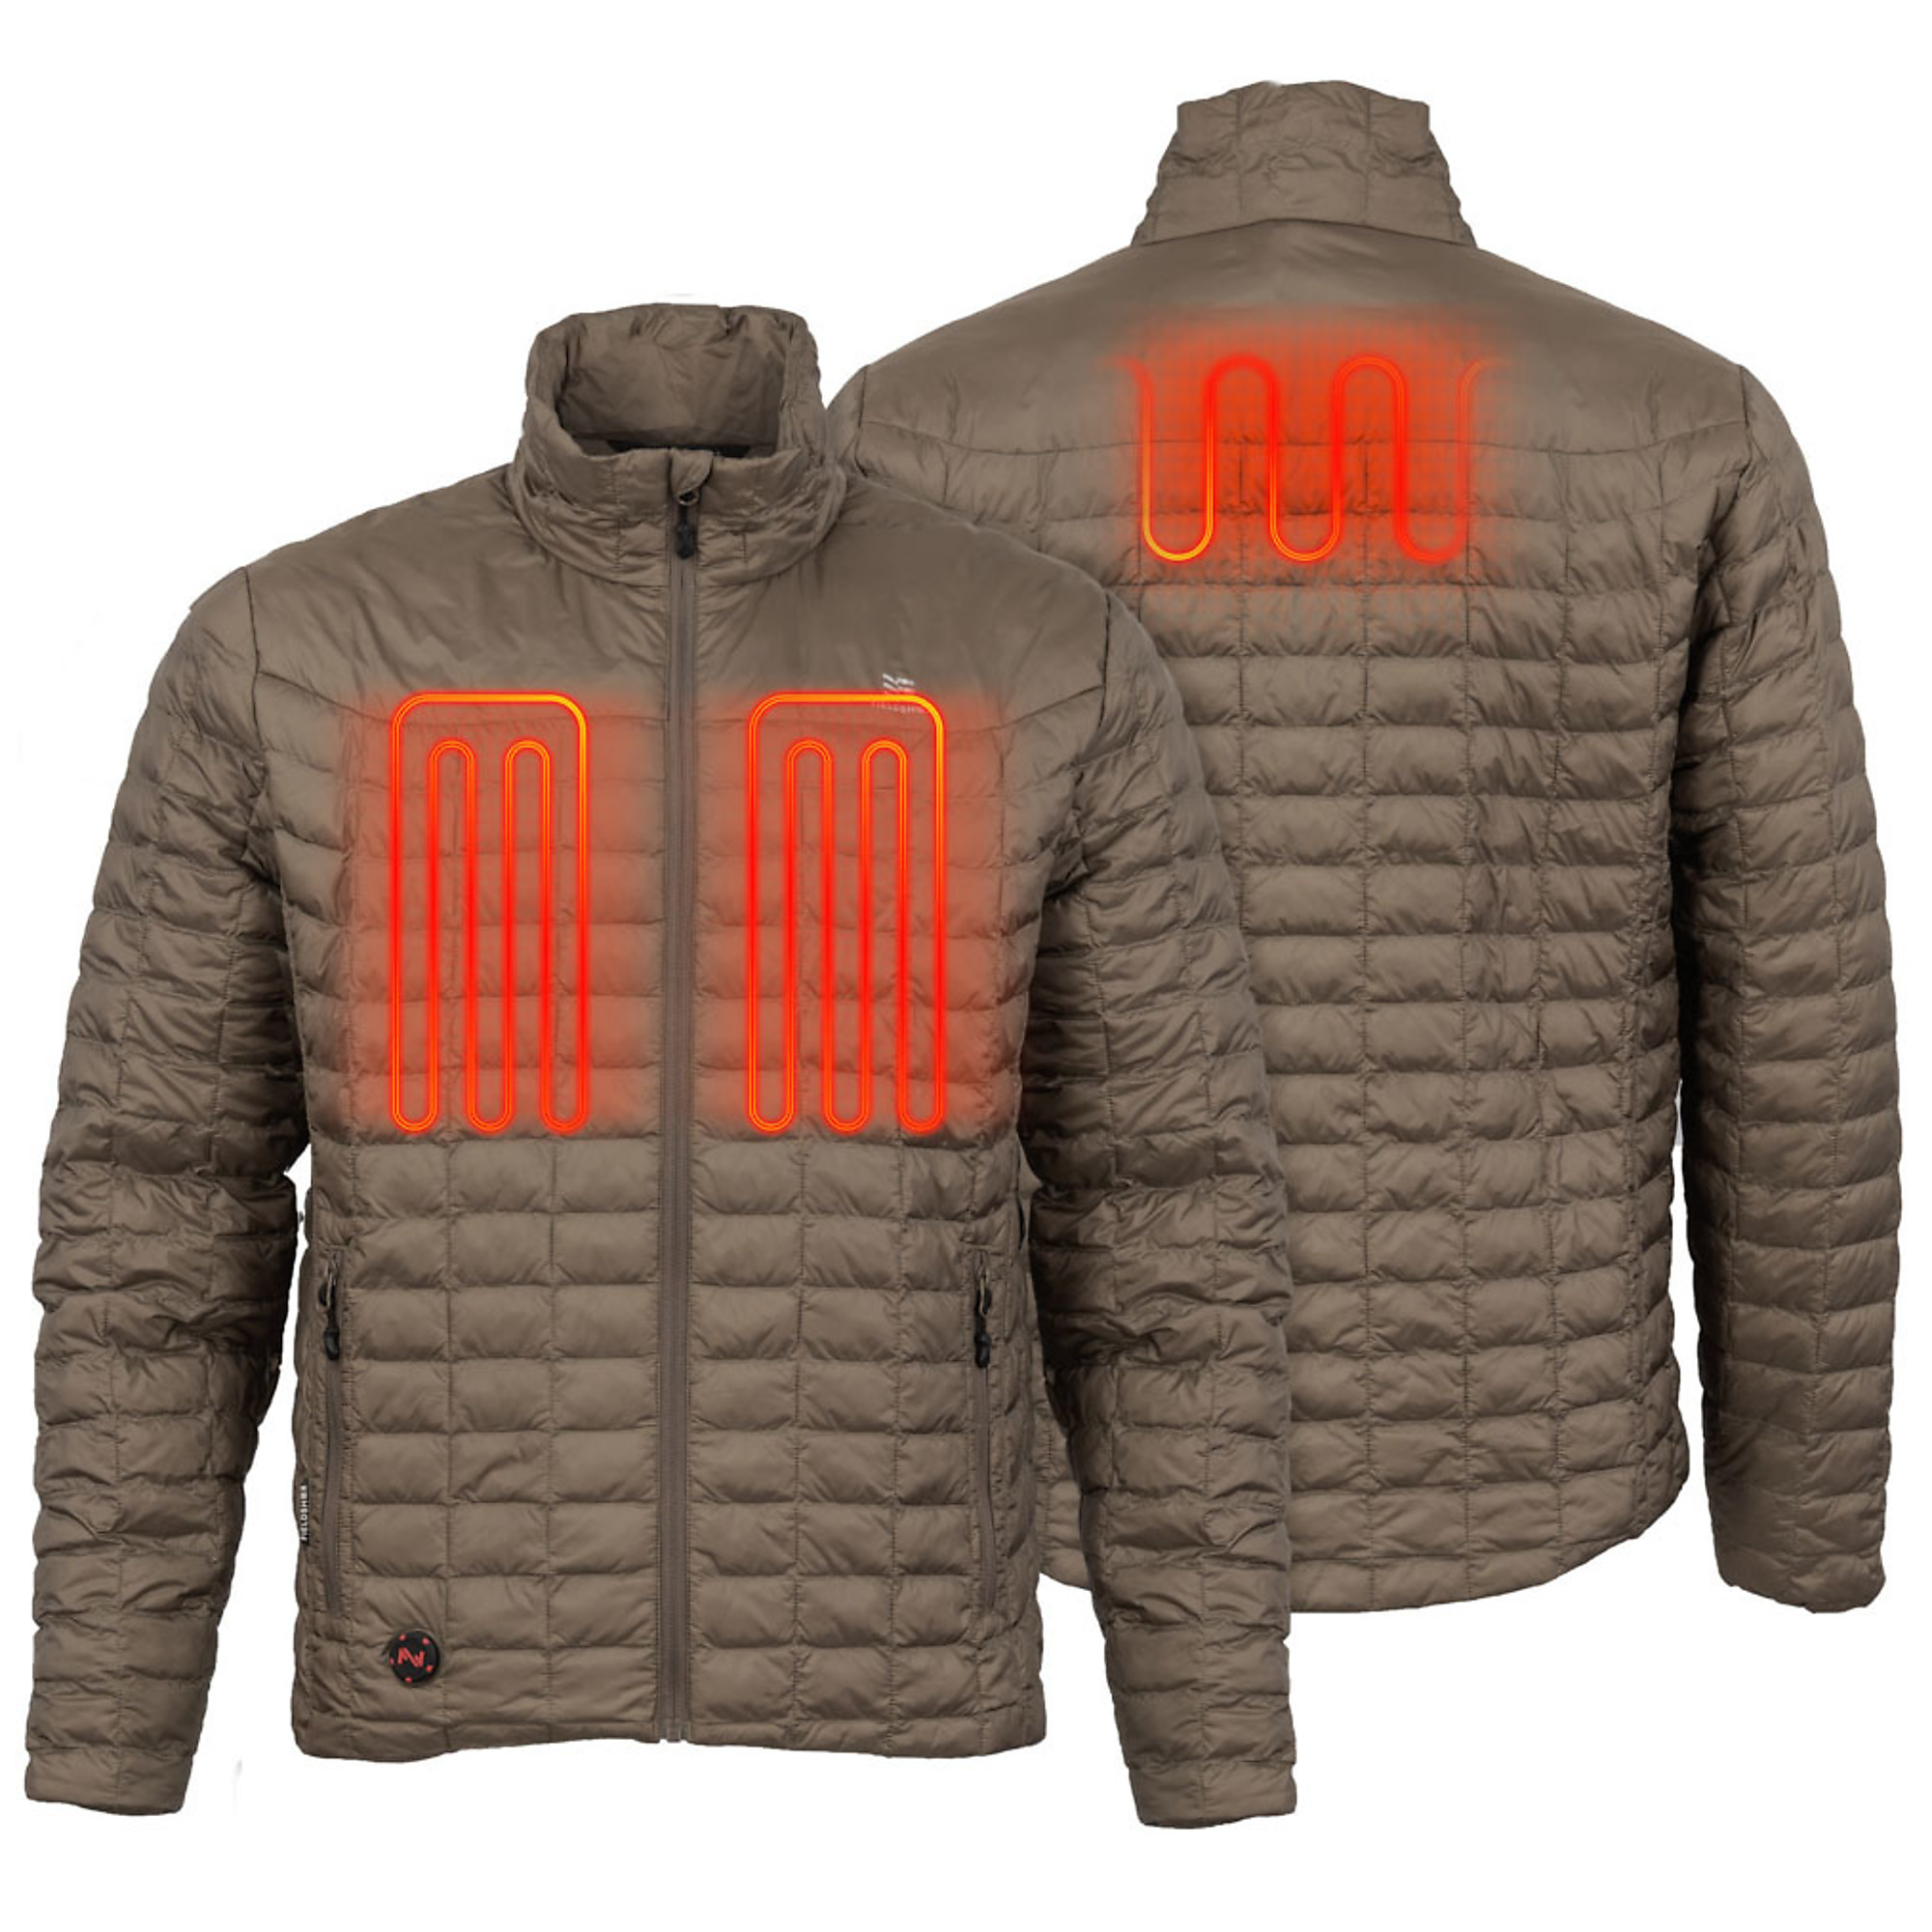 Fieldsheer, Men's Backcountry Heated Jacket with 7.4v Battery, Size XL, Color Tan, Model MWMJ04340521